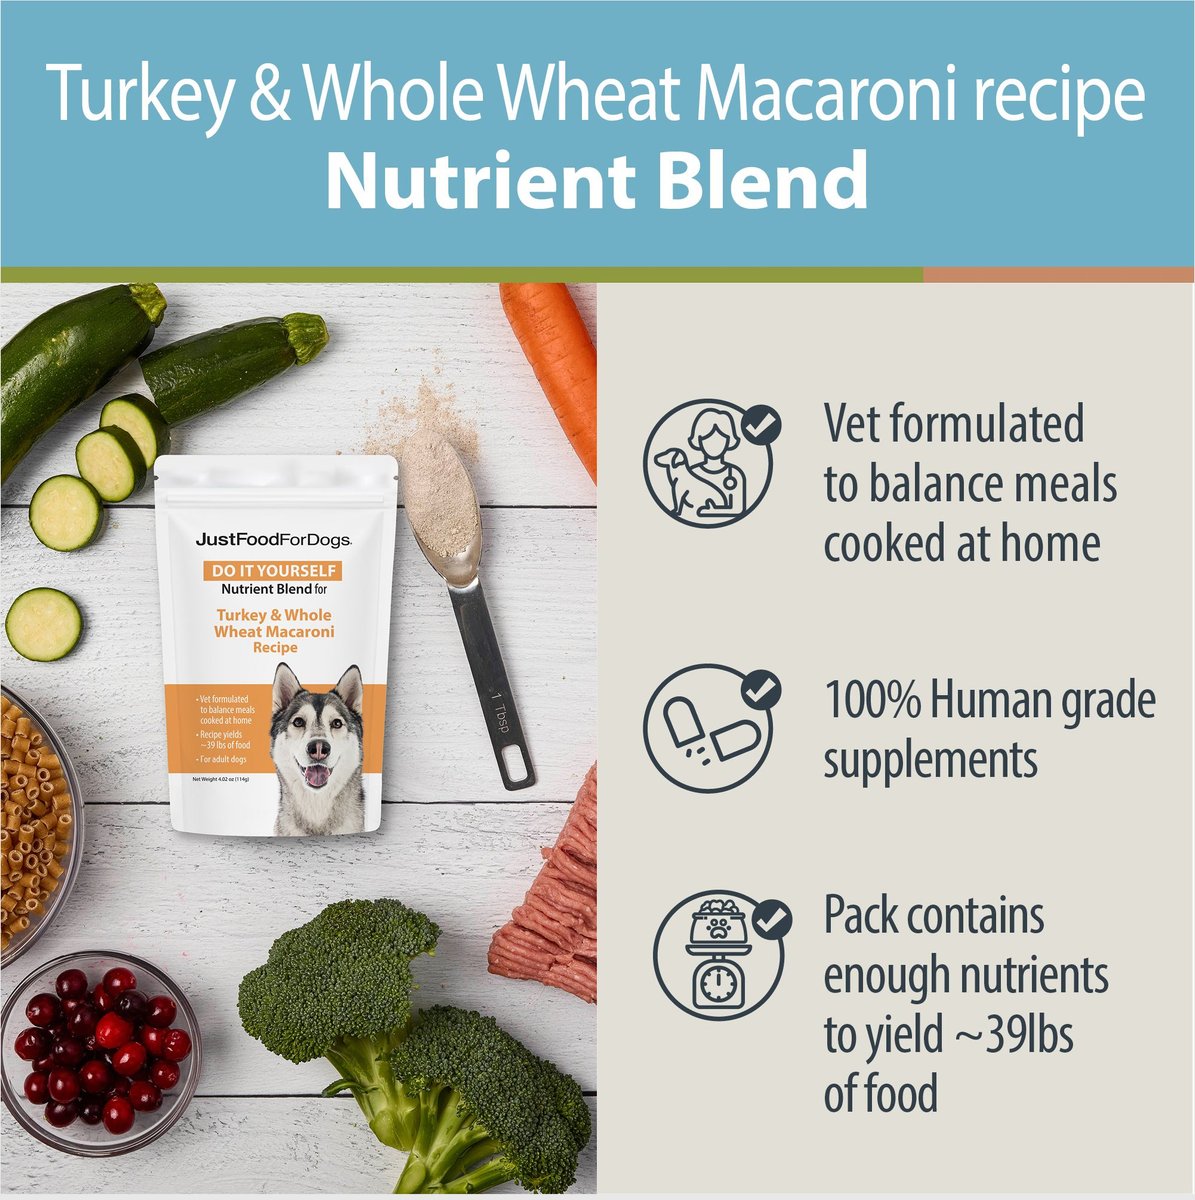 Do It Yourself Nutrient Blend - Turkey